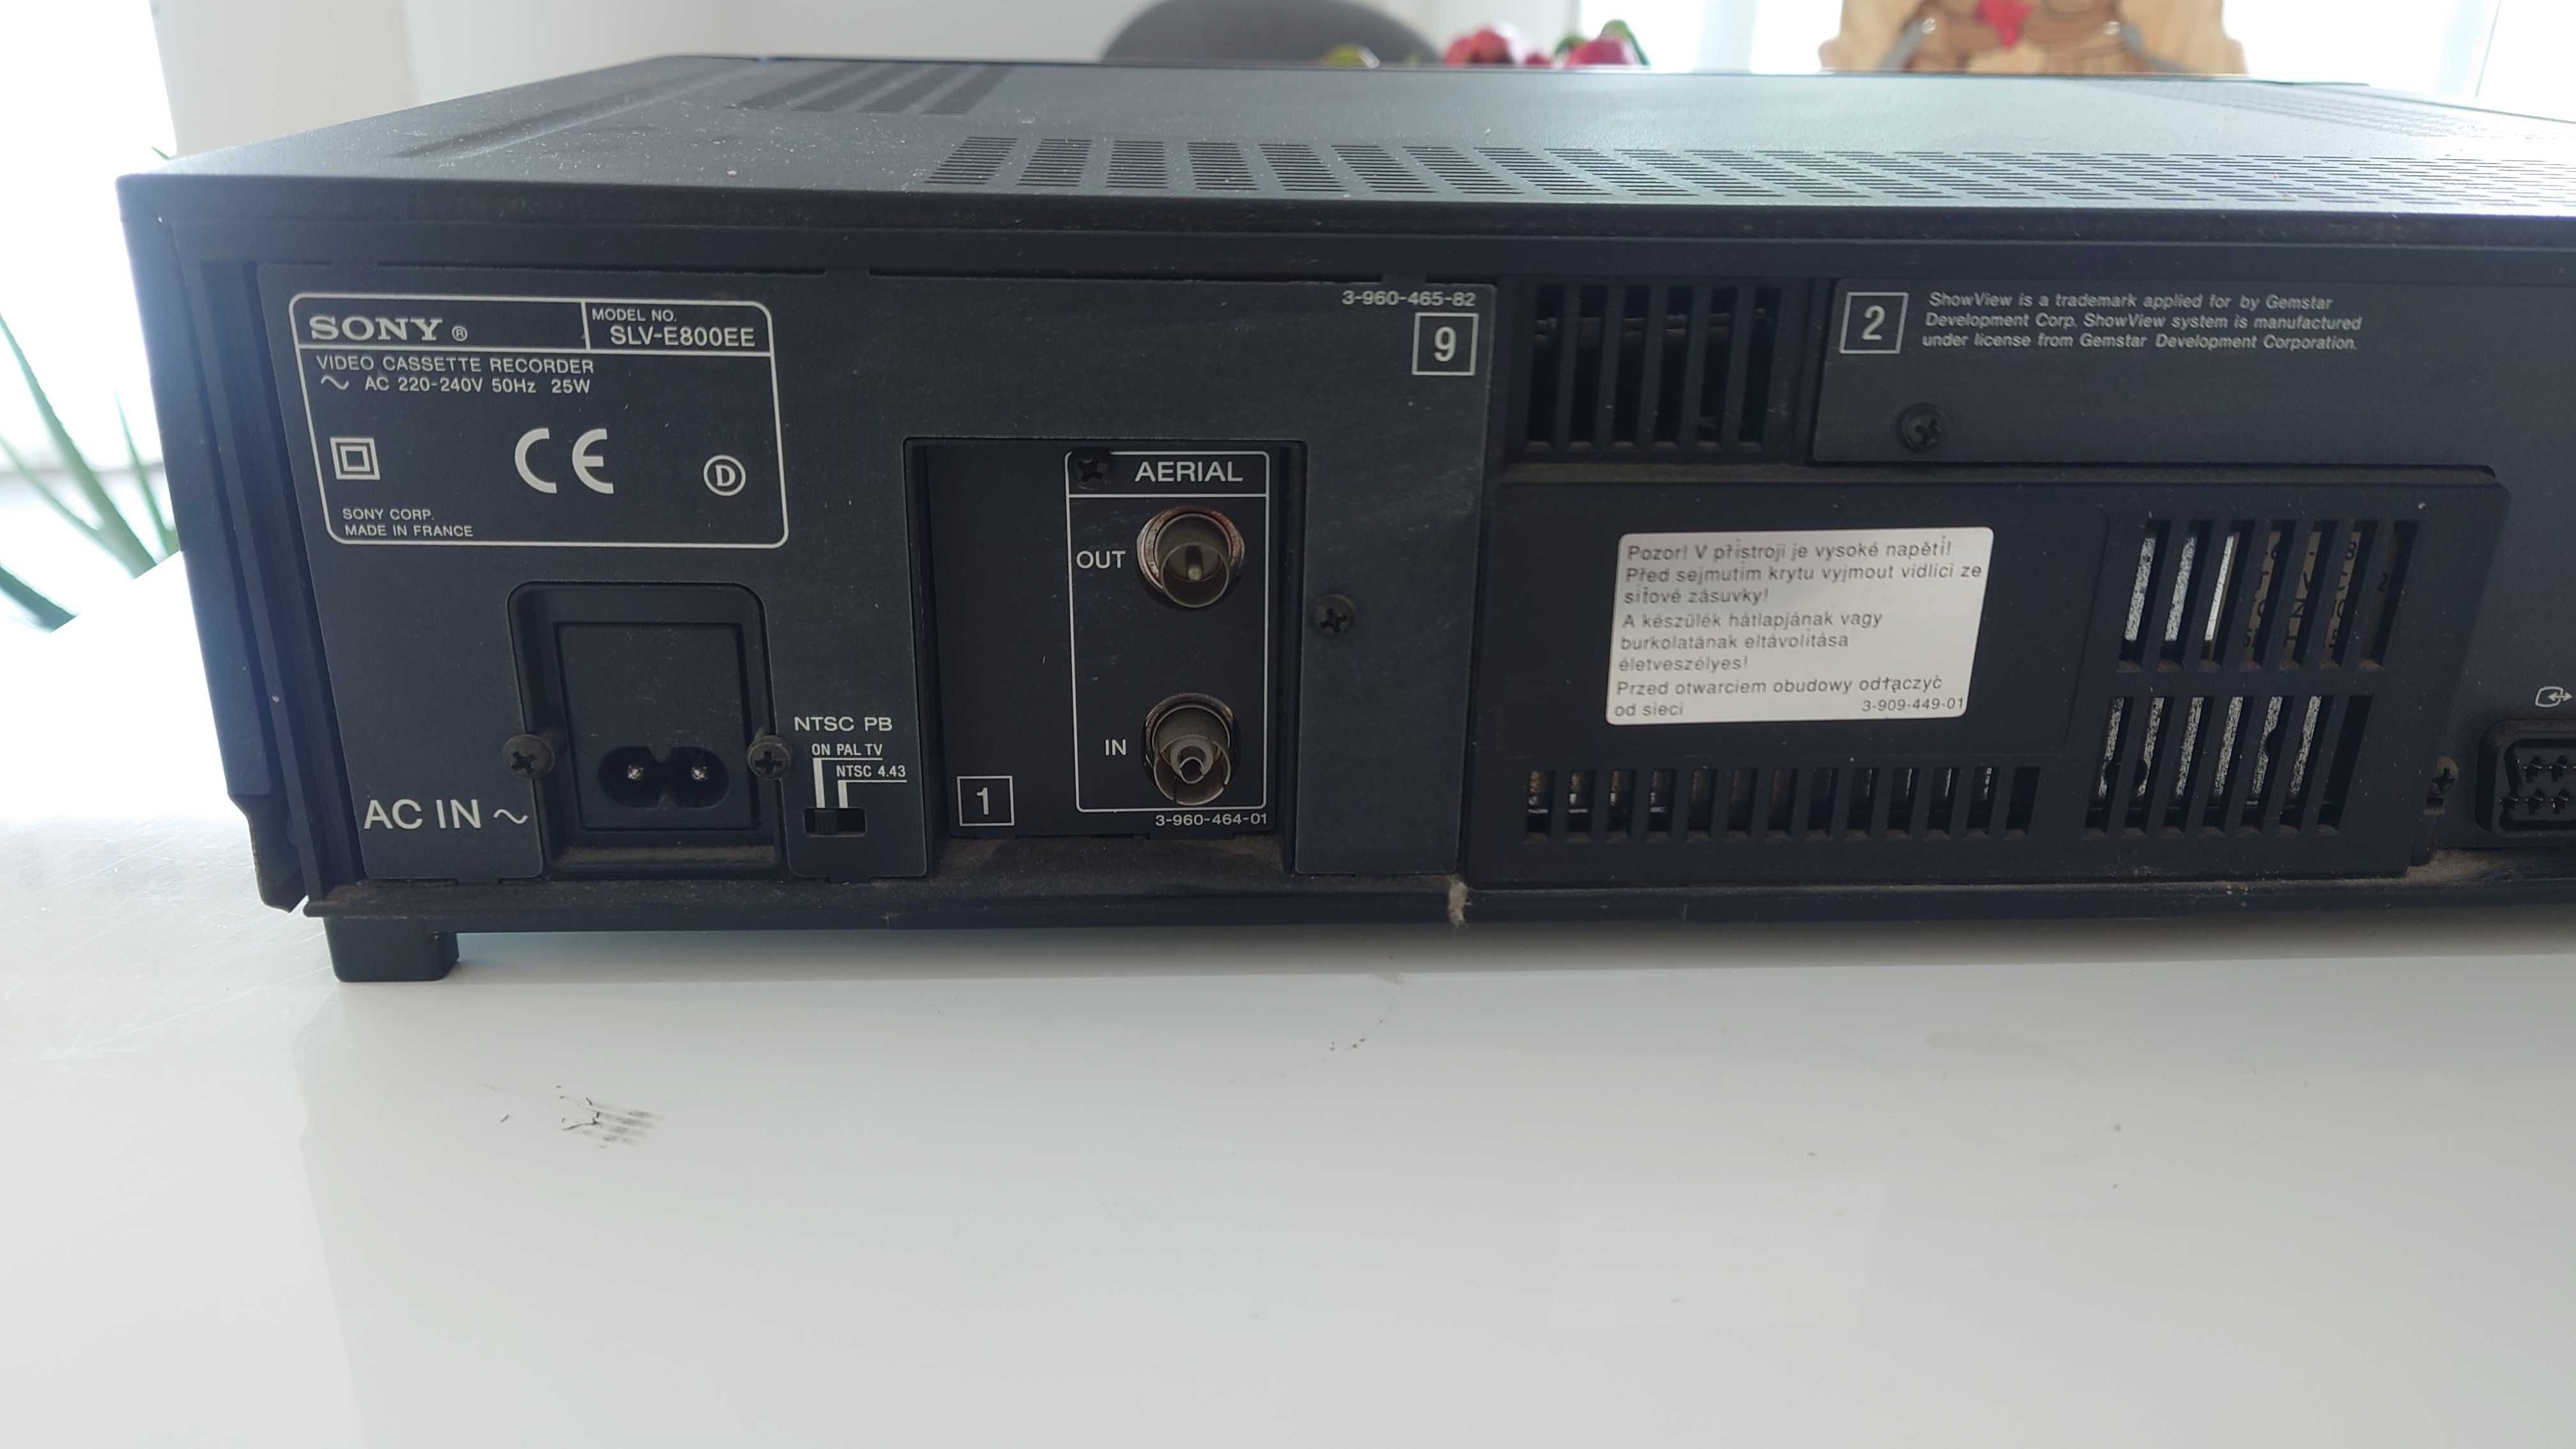 SONY SLV-E800EE Hi-Fi Stereo Video Recorder VHS ShowView